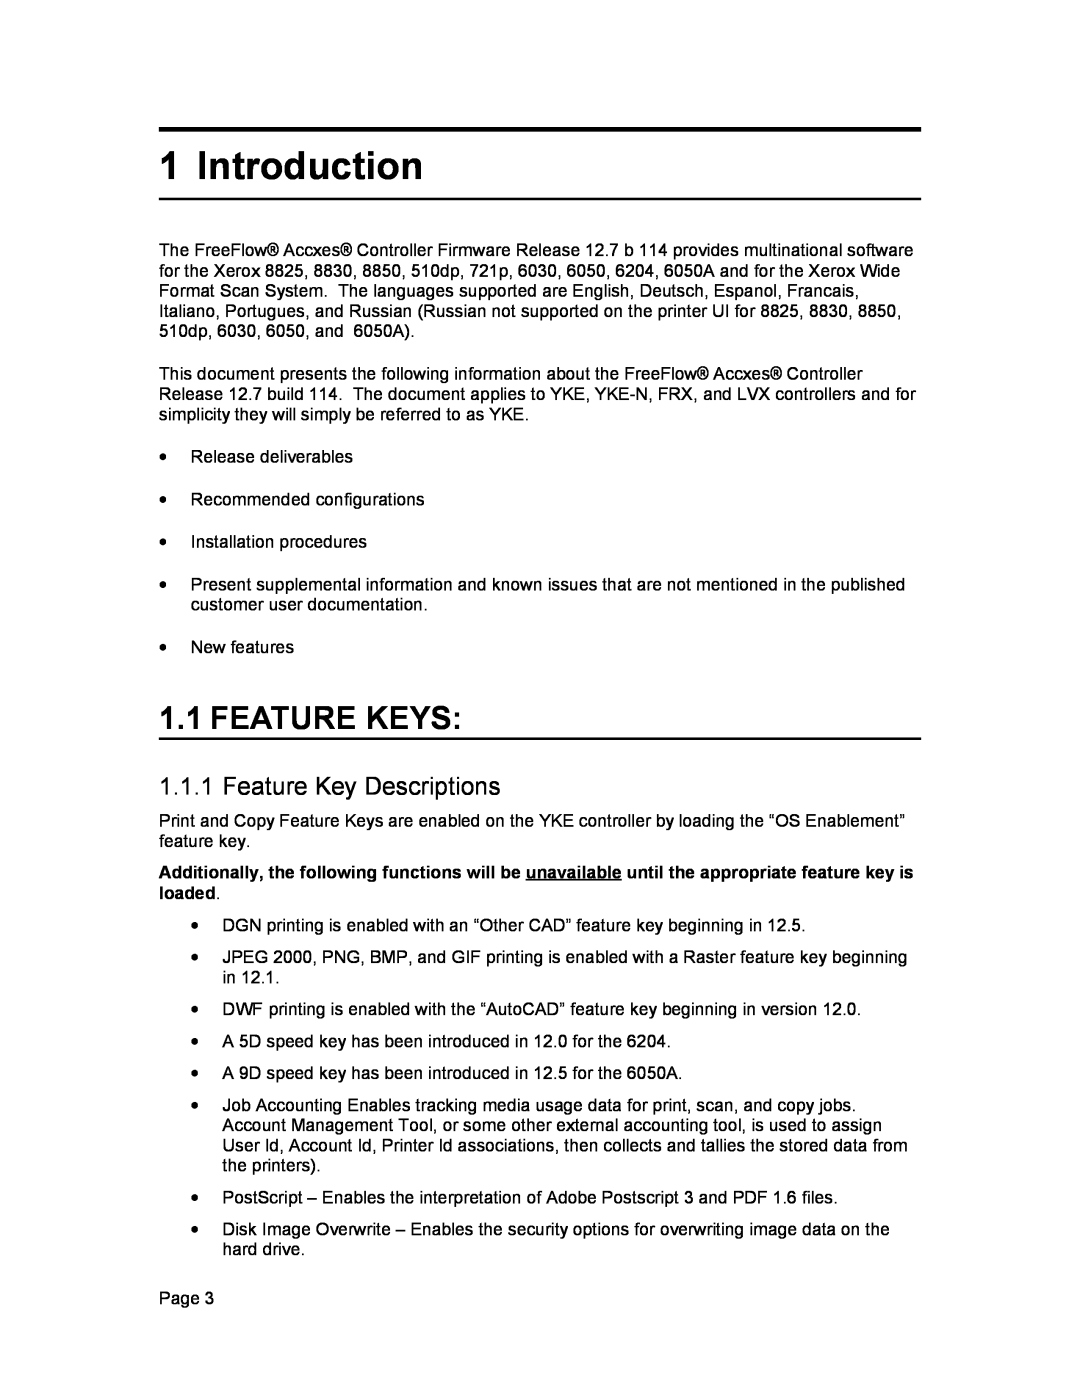 Xerox 12.7 B 114 manual Introduction, Feature Keys, Feature Key Descriptions 